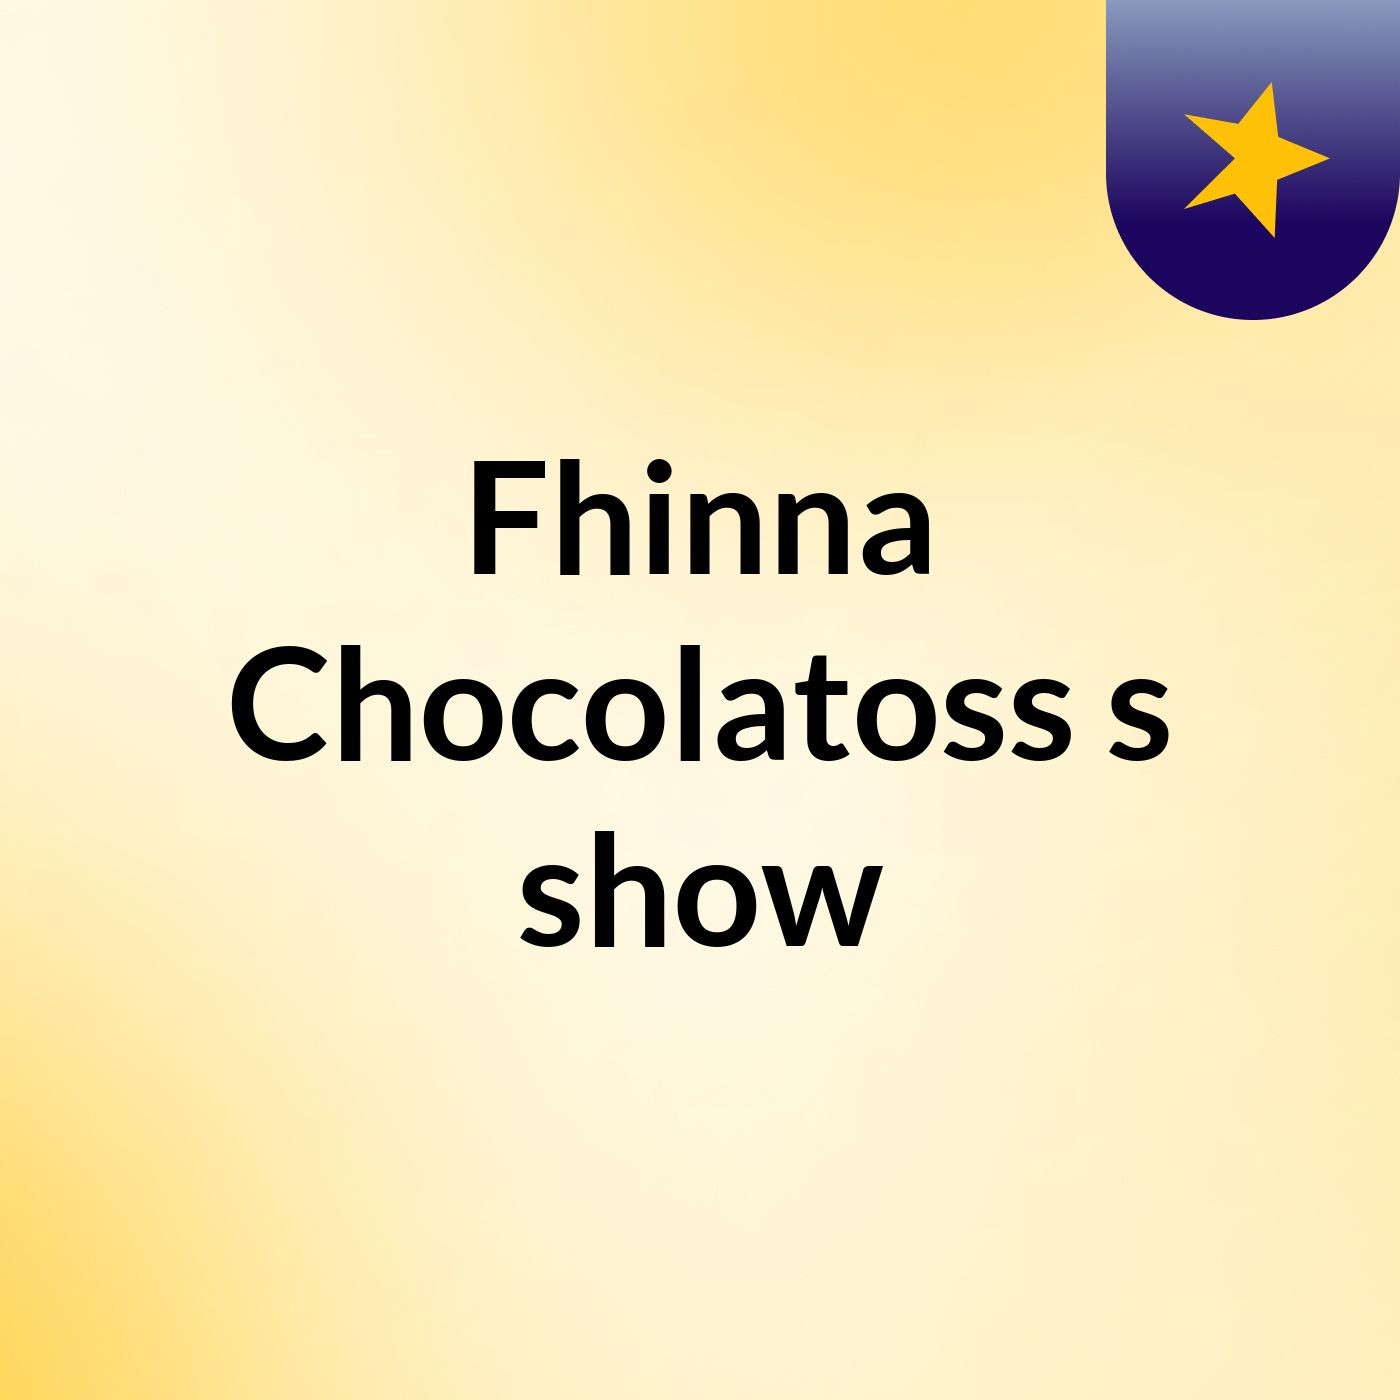 Fhinna Chocolatoss's show